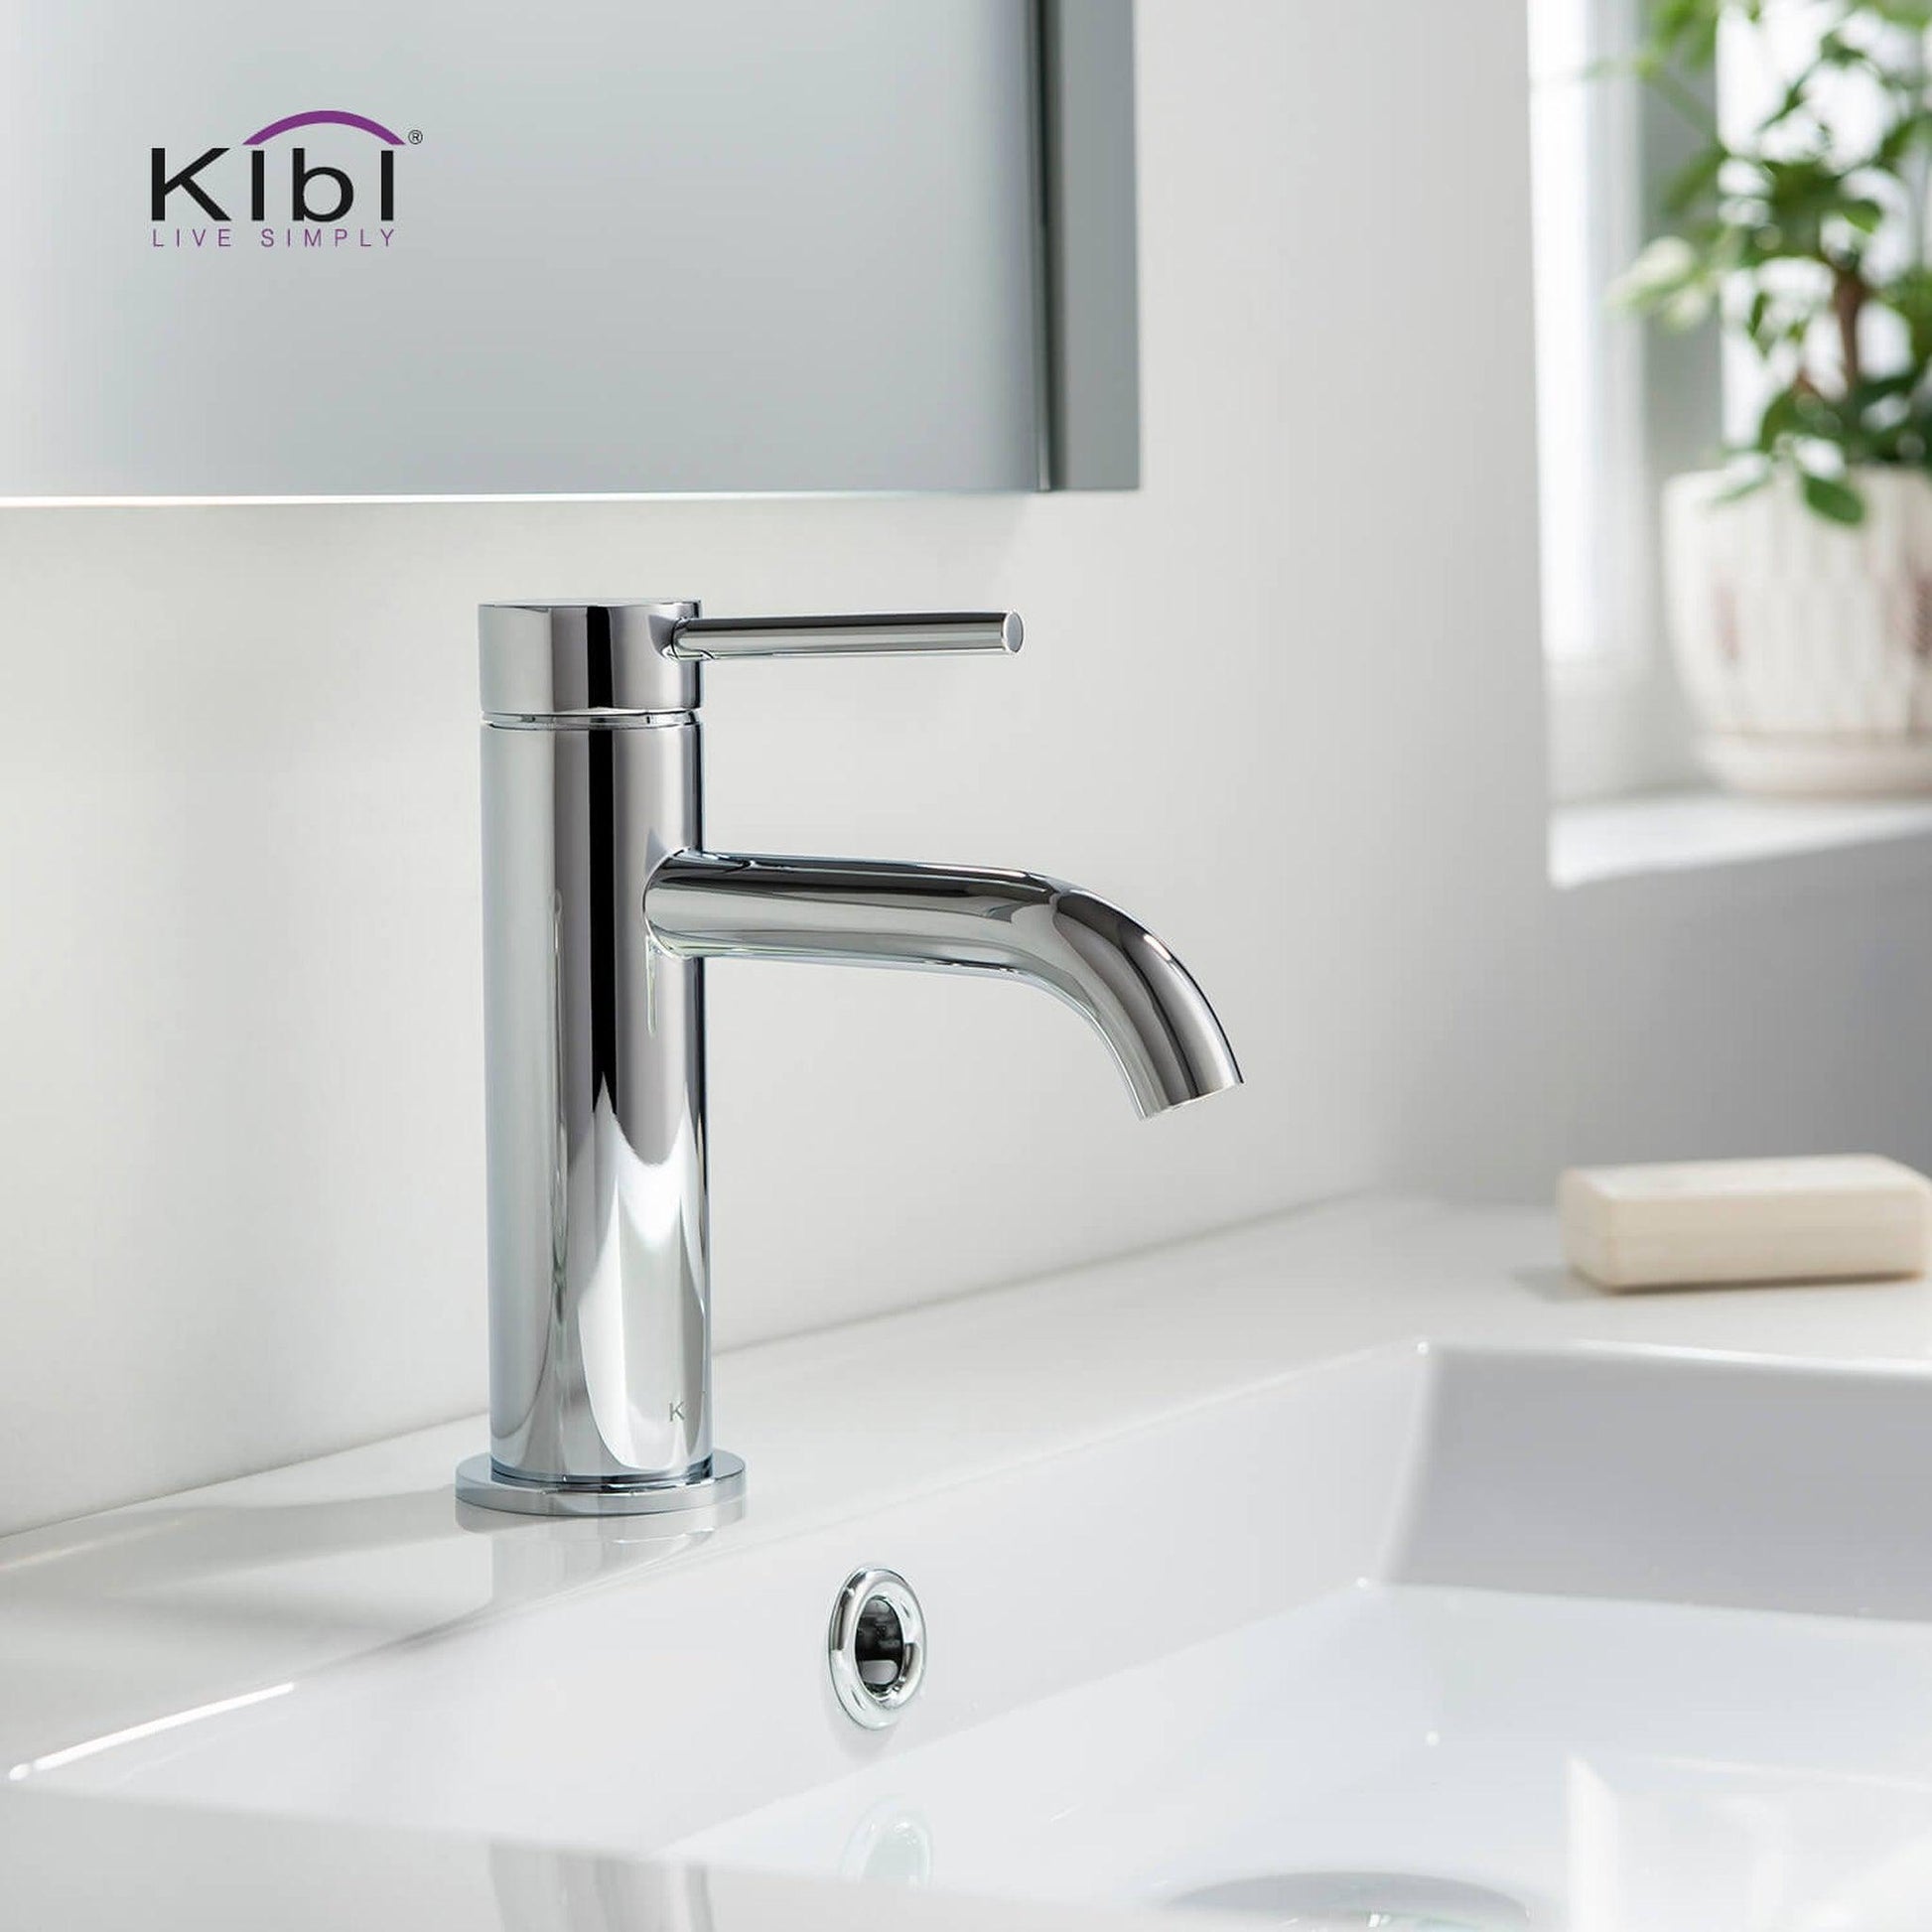 KIBI Circular Single Handle Chrome Solid Brass Bathroom Sink Faucet